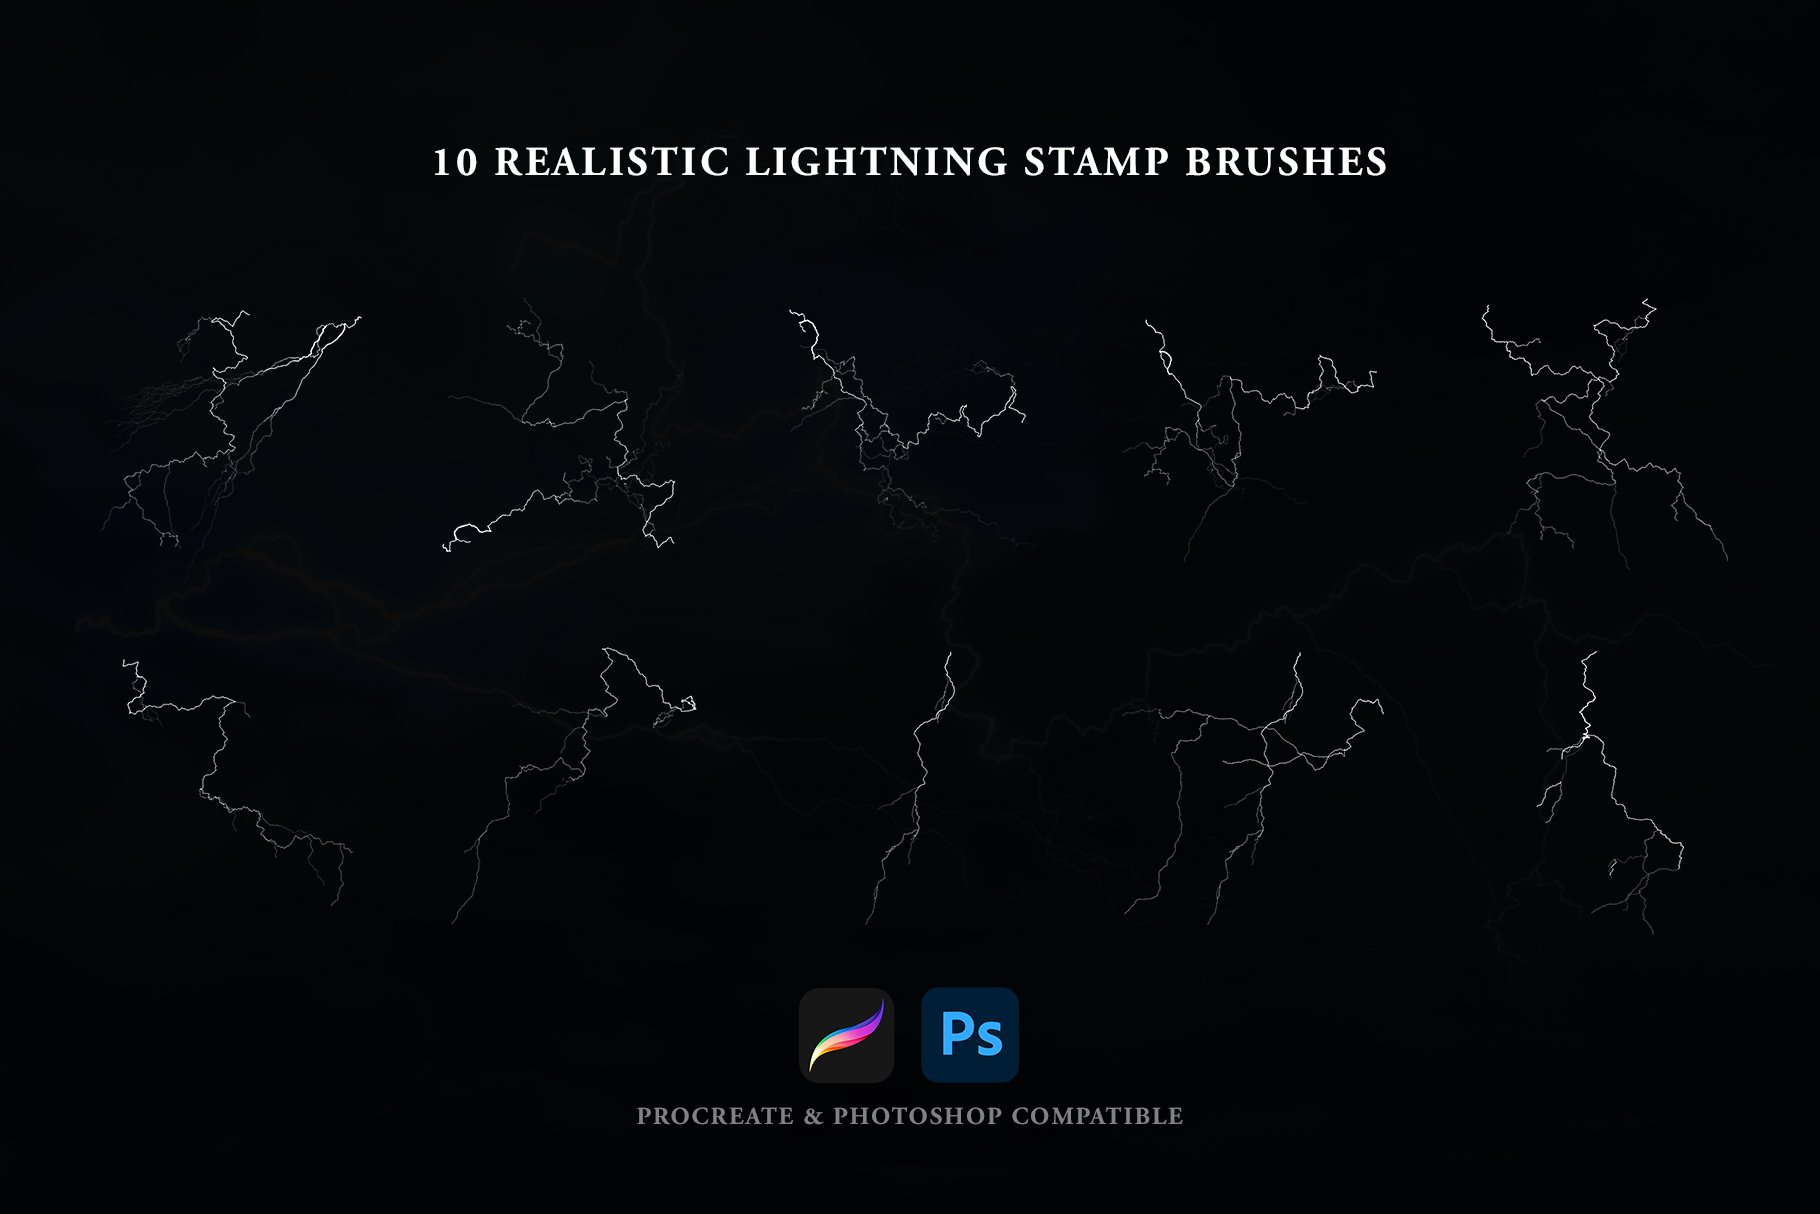 Realistic Lightning Pro Brushespreview image.